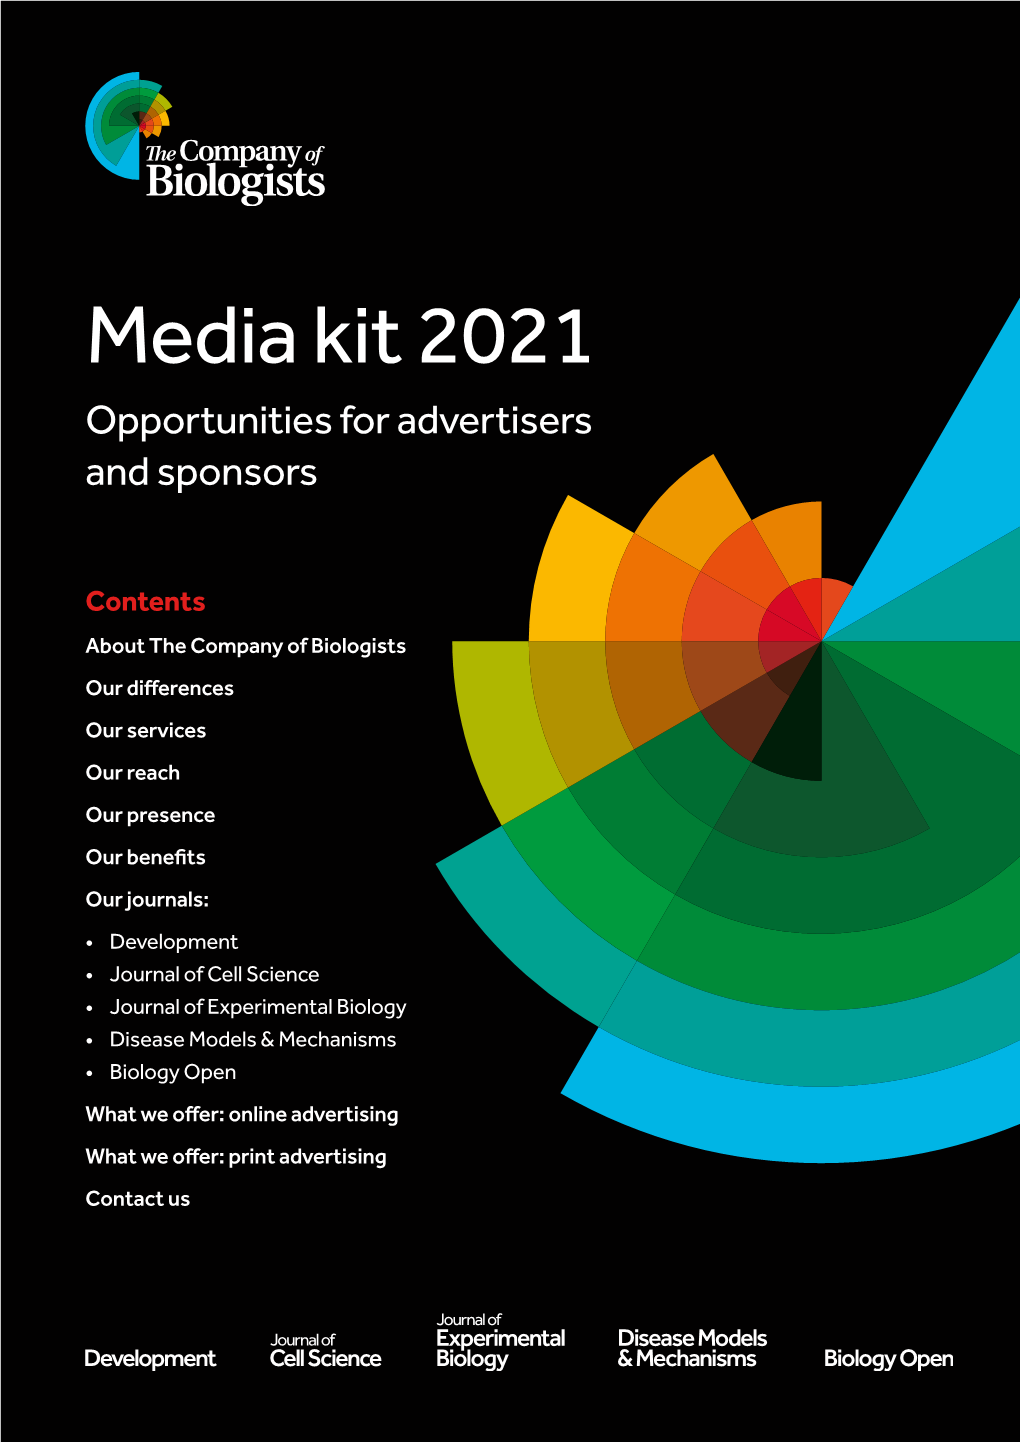 Media Kit 2021 Opportunities for Advertisers and Sponsors